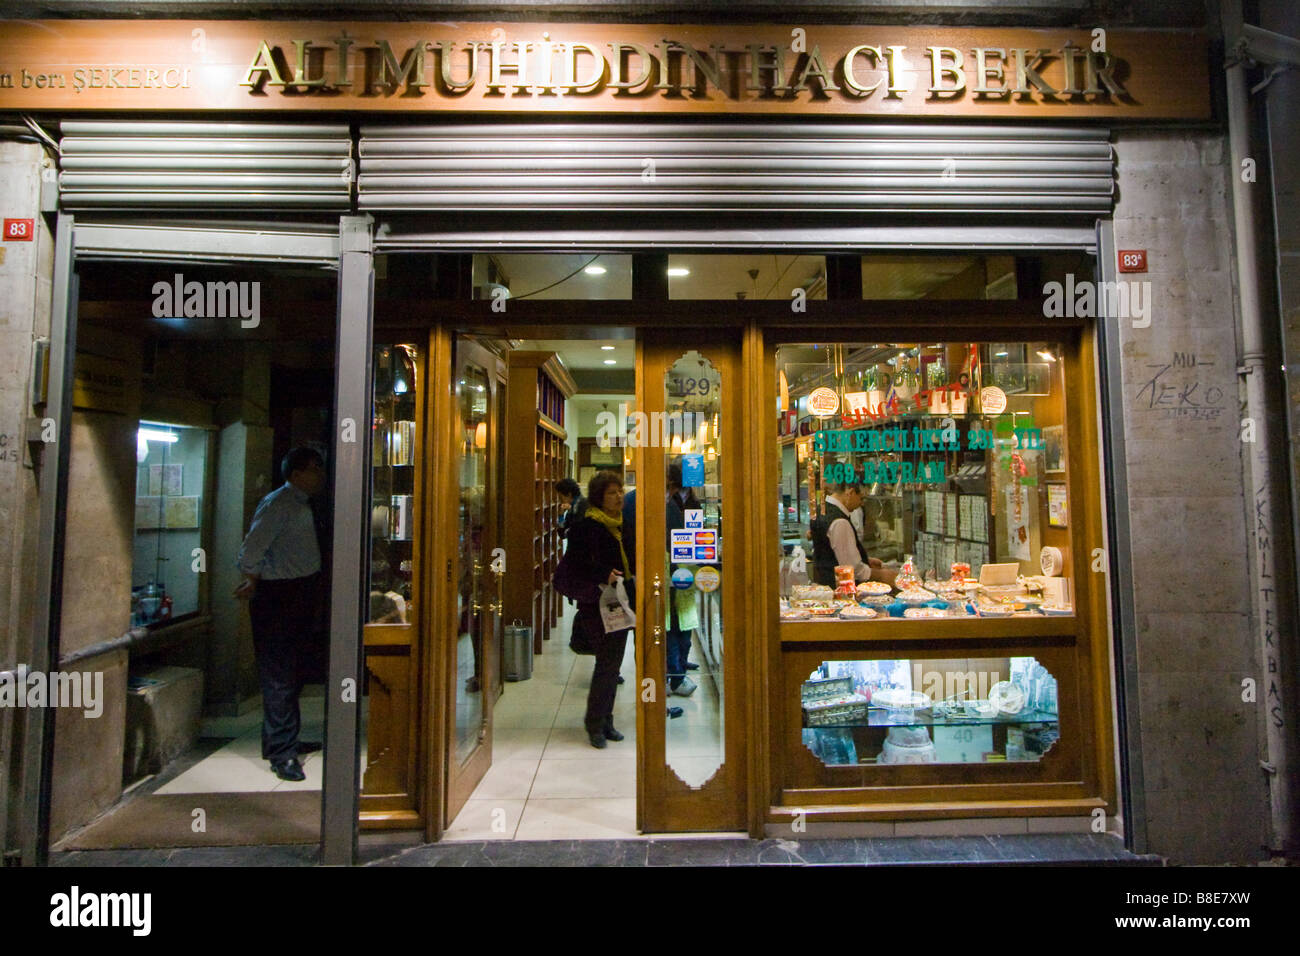 Ali Muhiddinhaci Bekir Original turc Delight Sweet Shop sur Istiklal Caddesi à Istanbul Turquie Banque D'Images